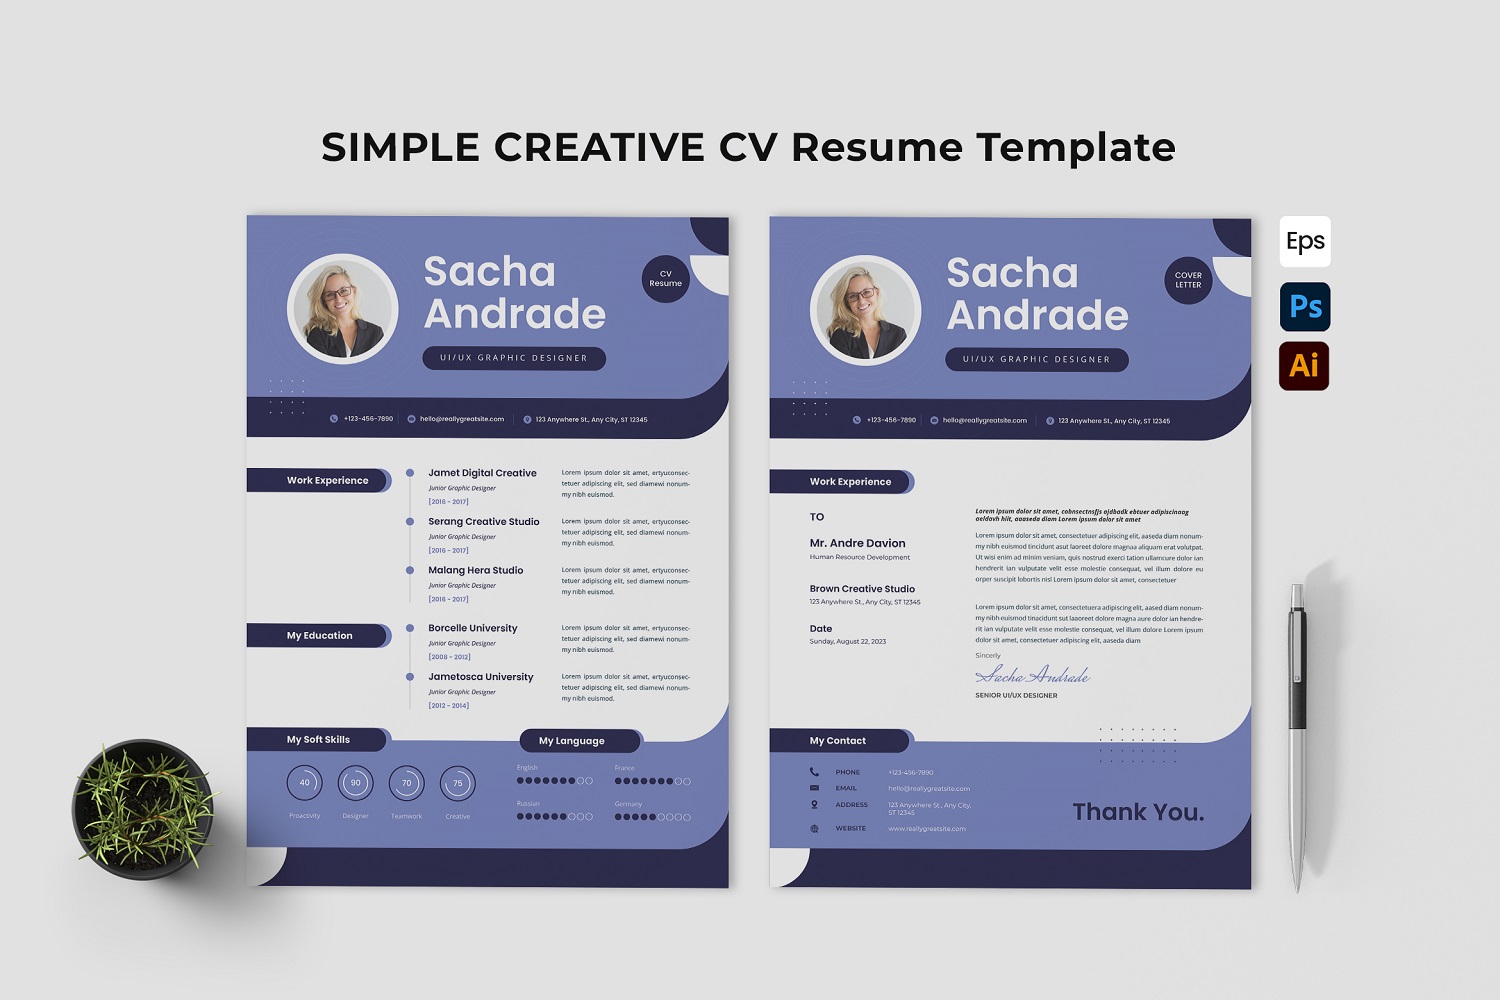 Simple Creative CV Resume